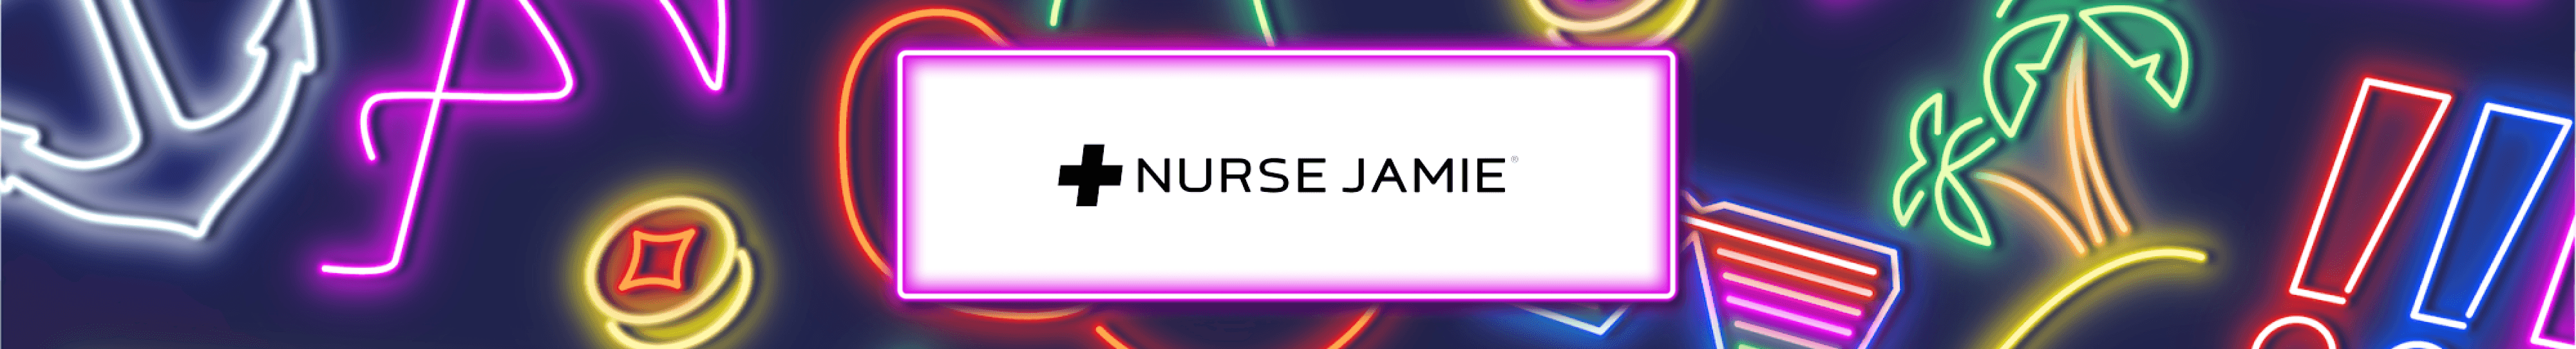 Nurse Jamie Desktop.png